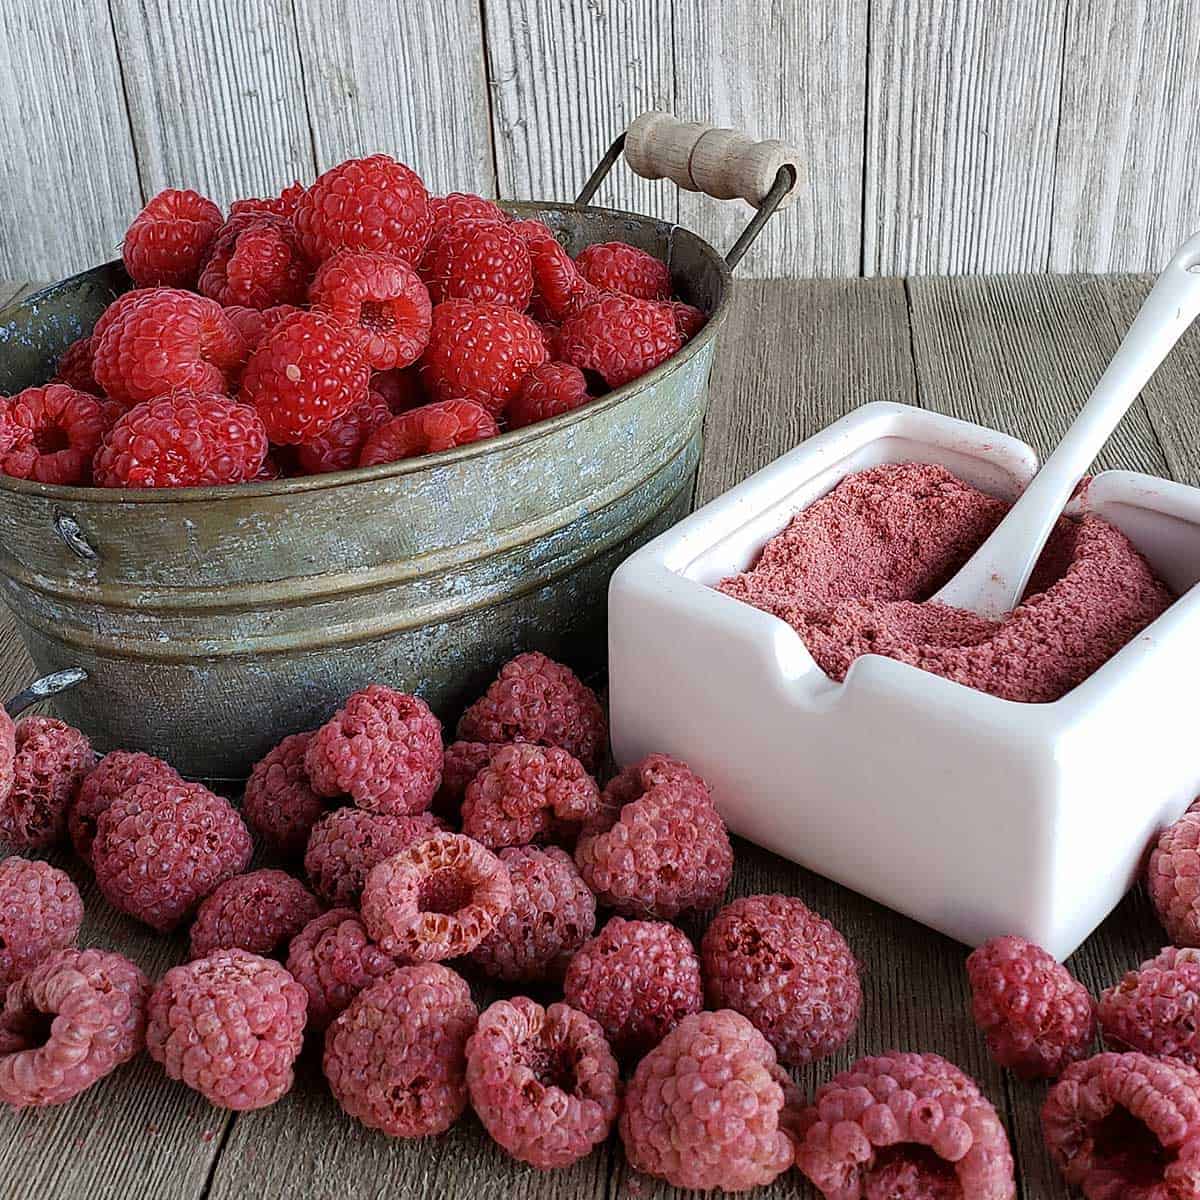 How to Dehydrate Raspberries and Make Raspberry Powder